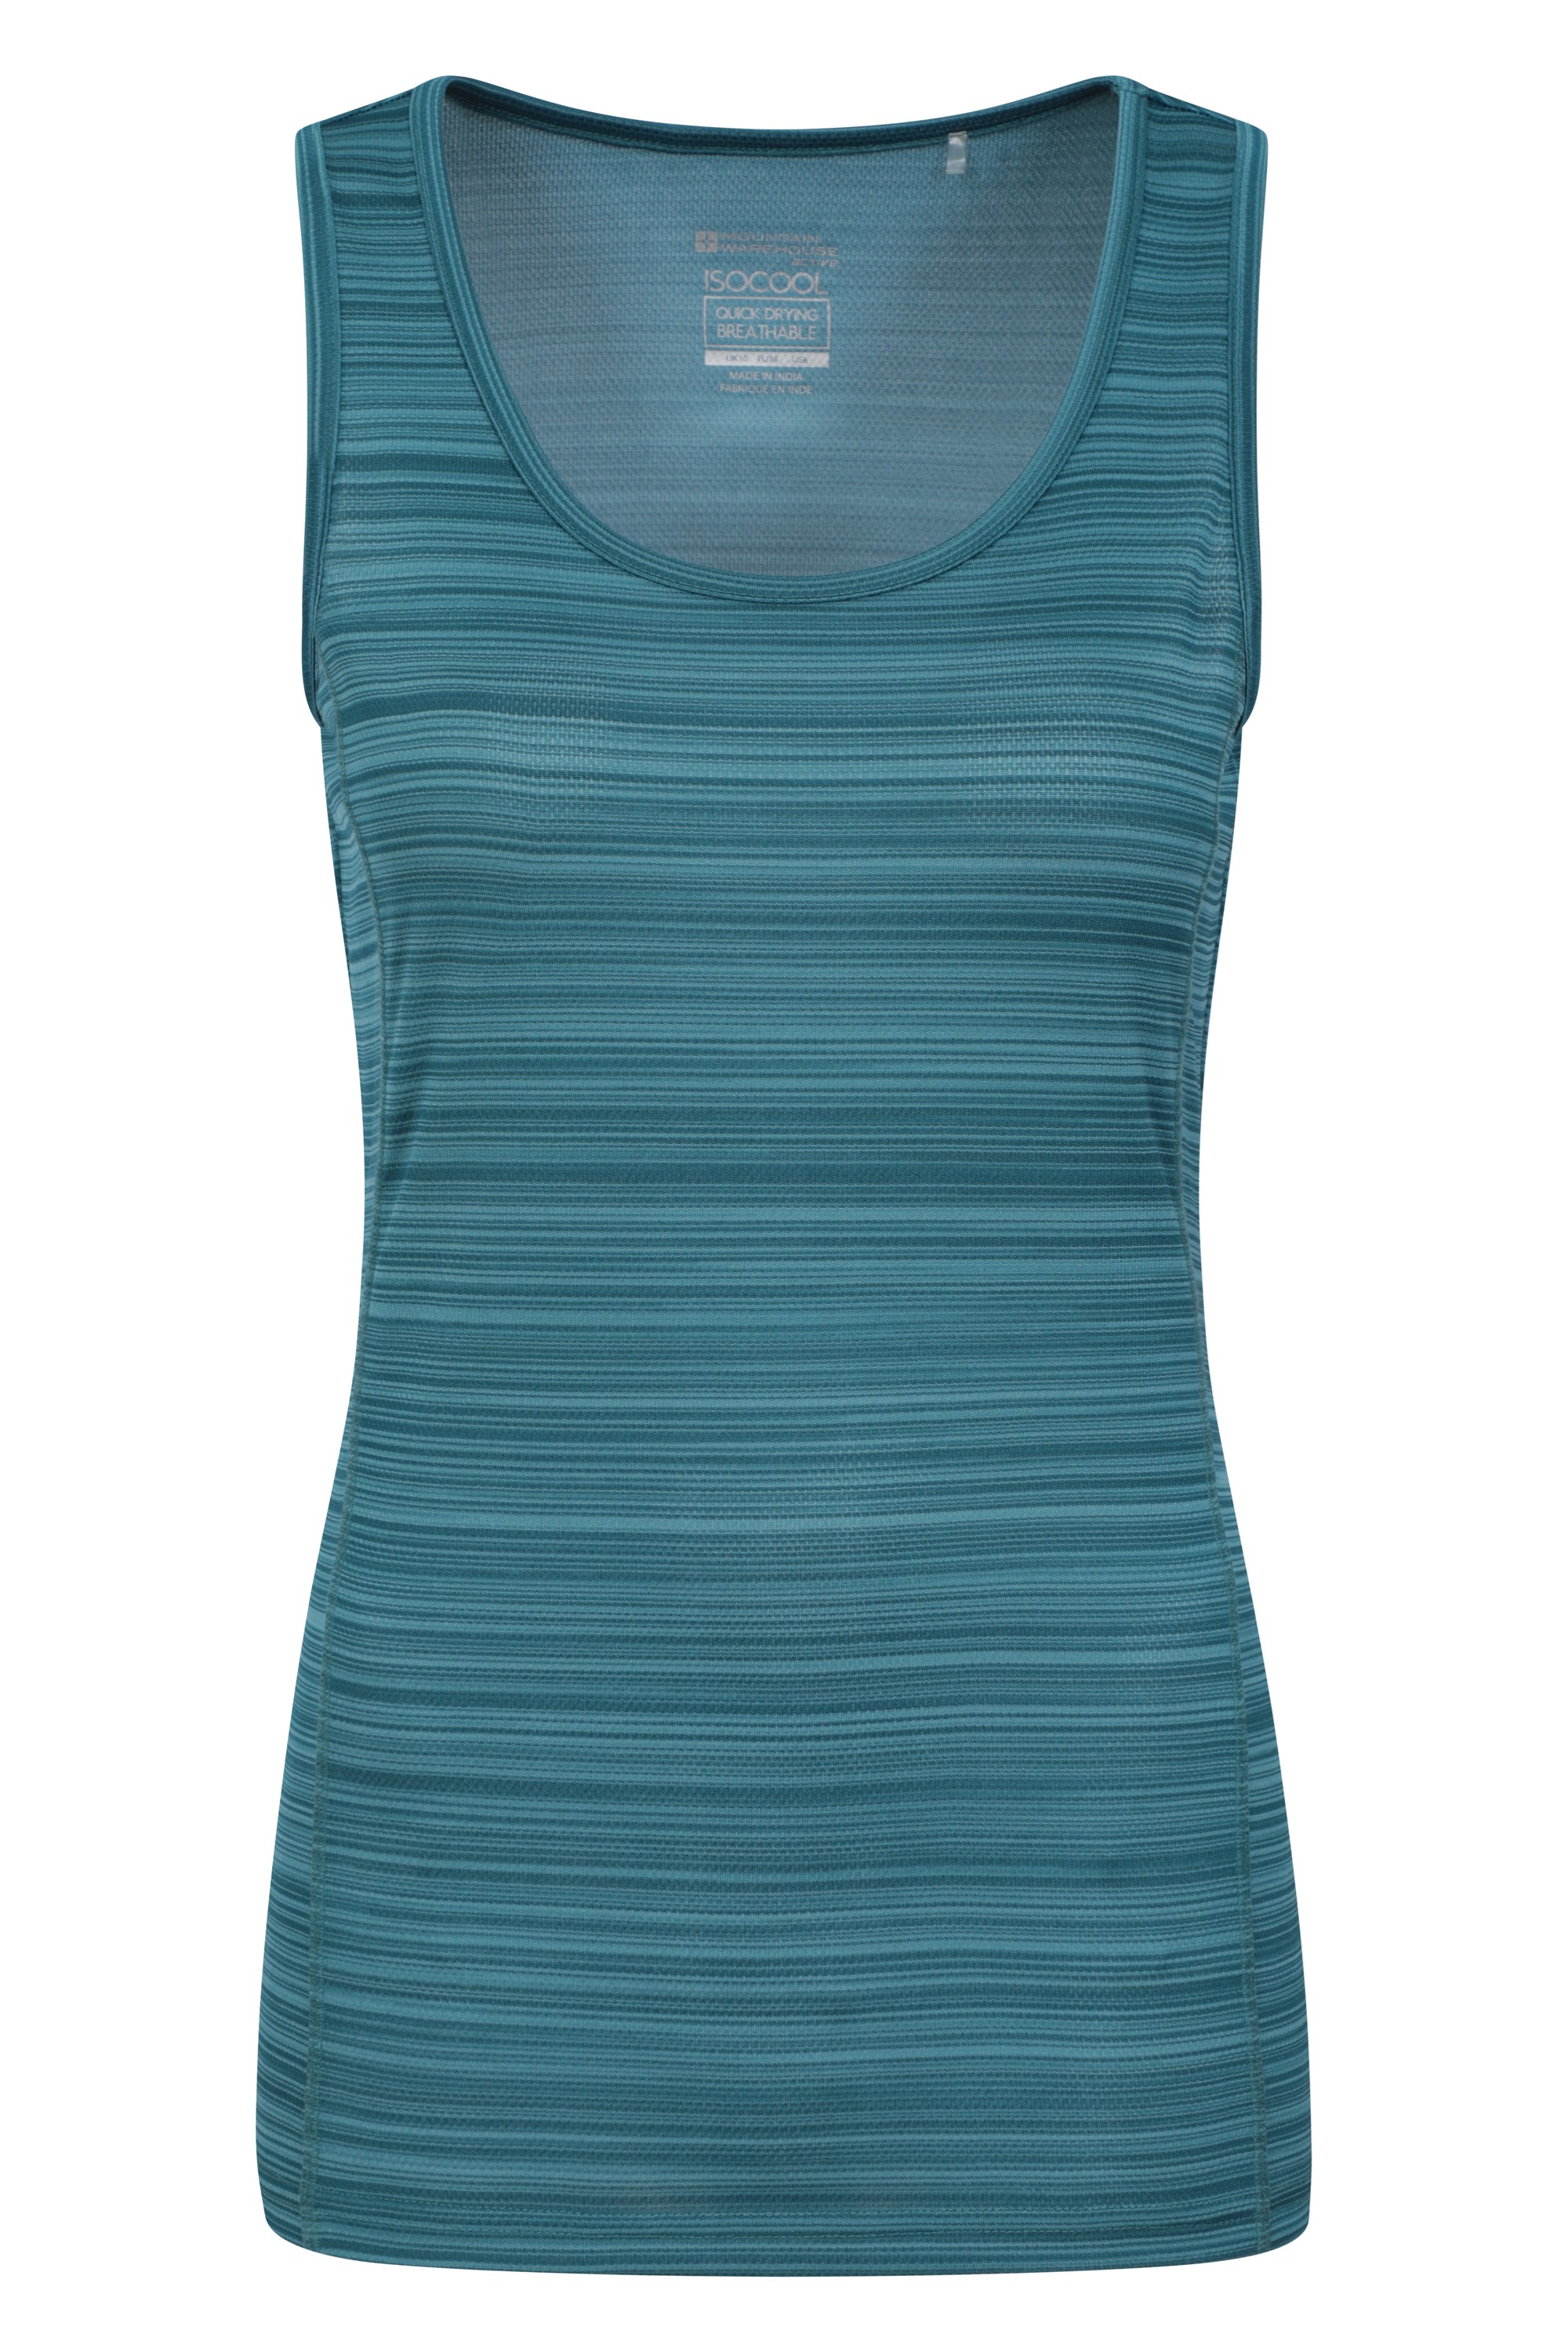 Endurance Striped Womens Vest - Turquoise